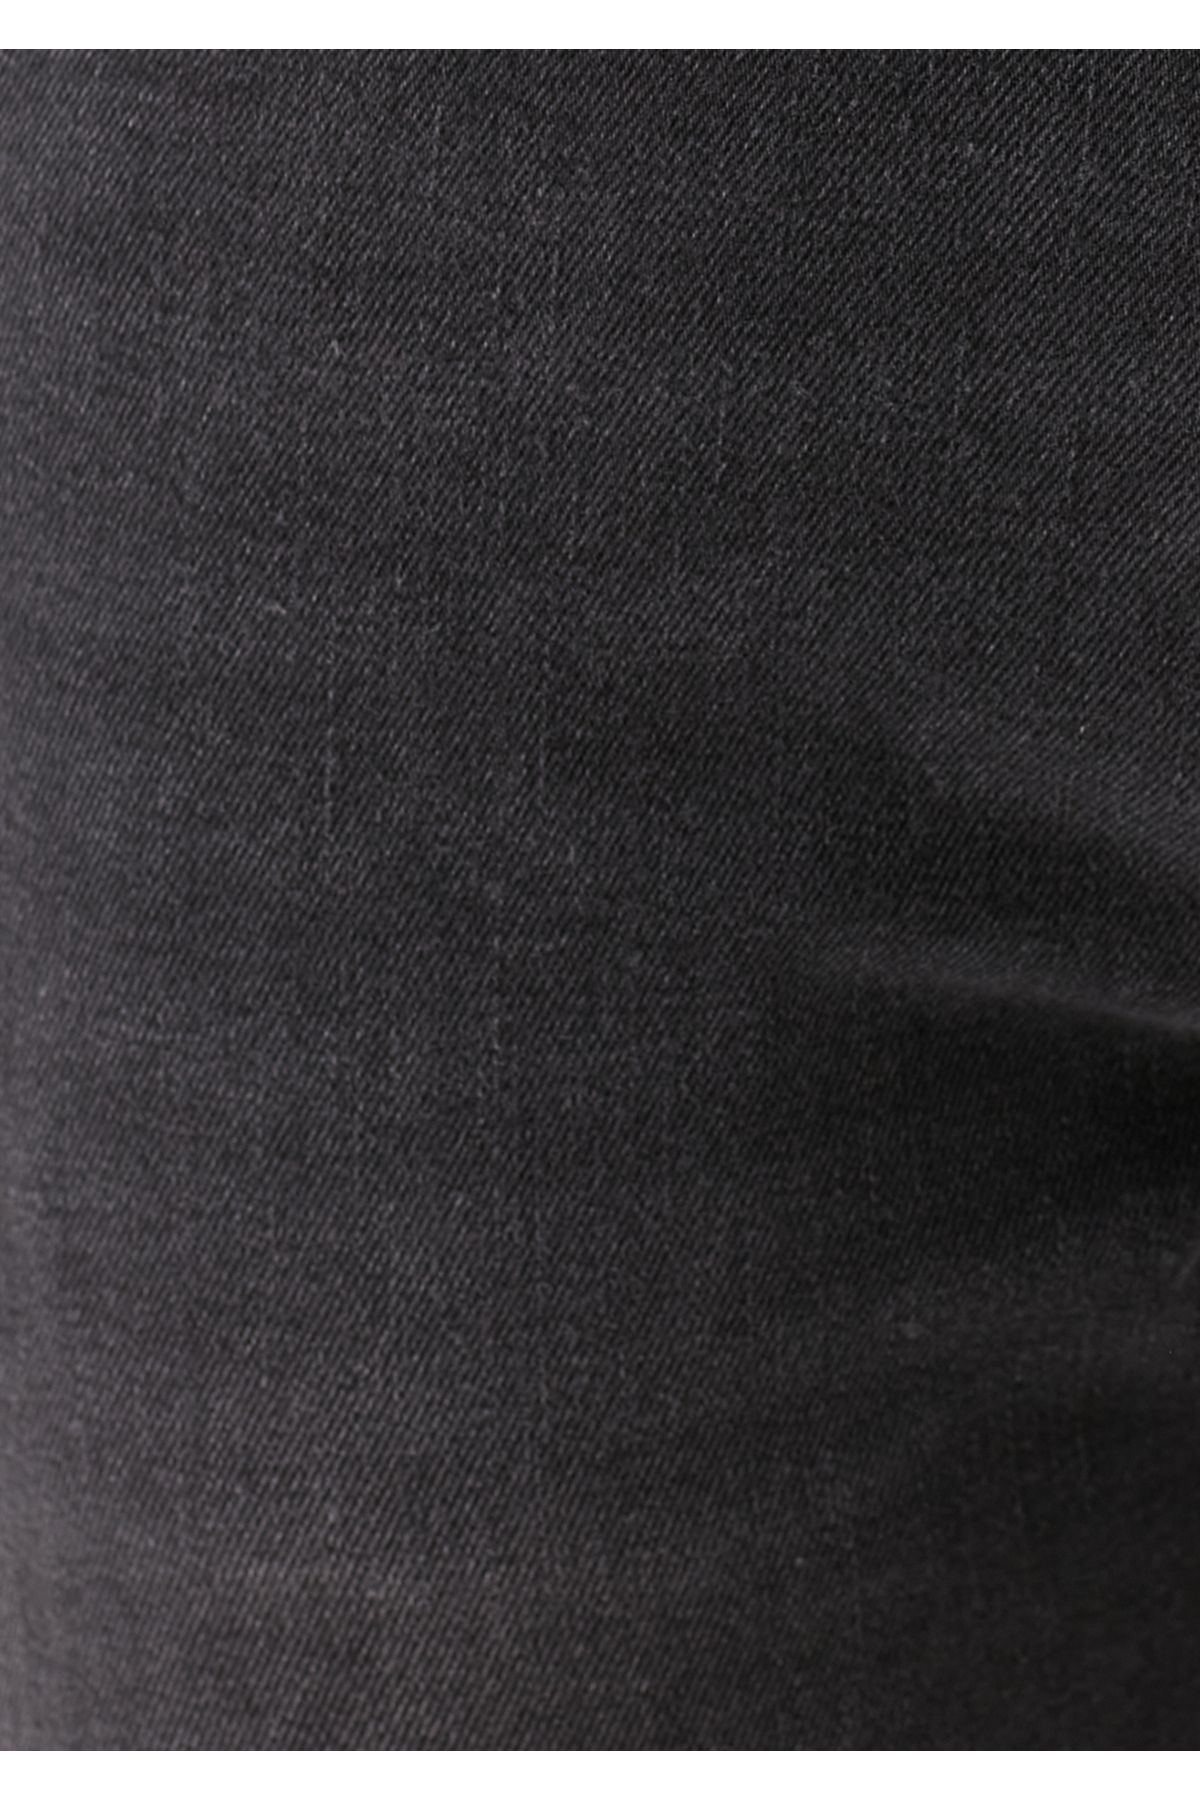 Mavi Rob Urban Comfort Grey Jean شلوار 001030-33896